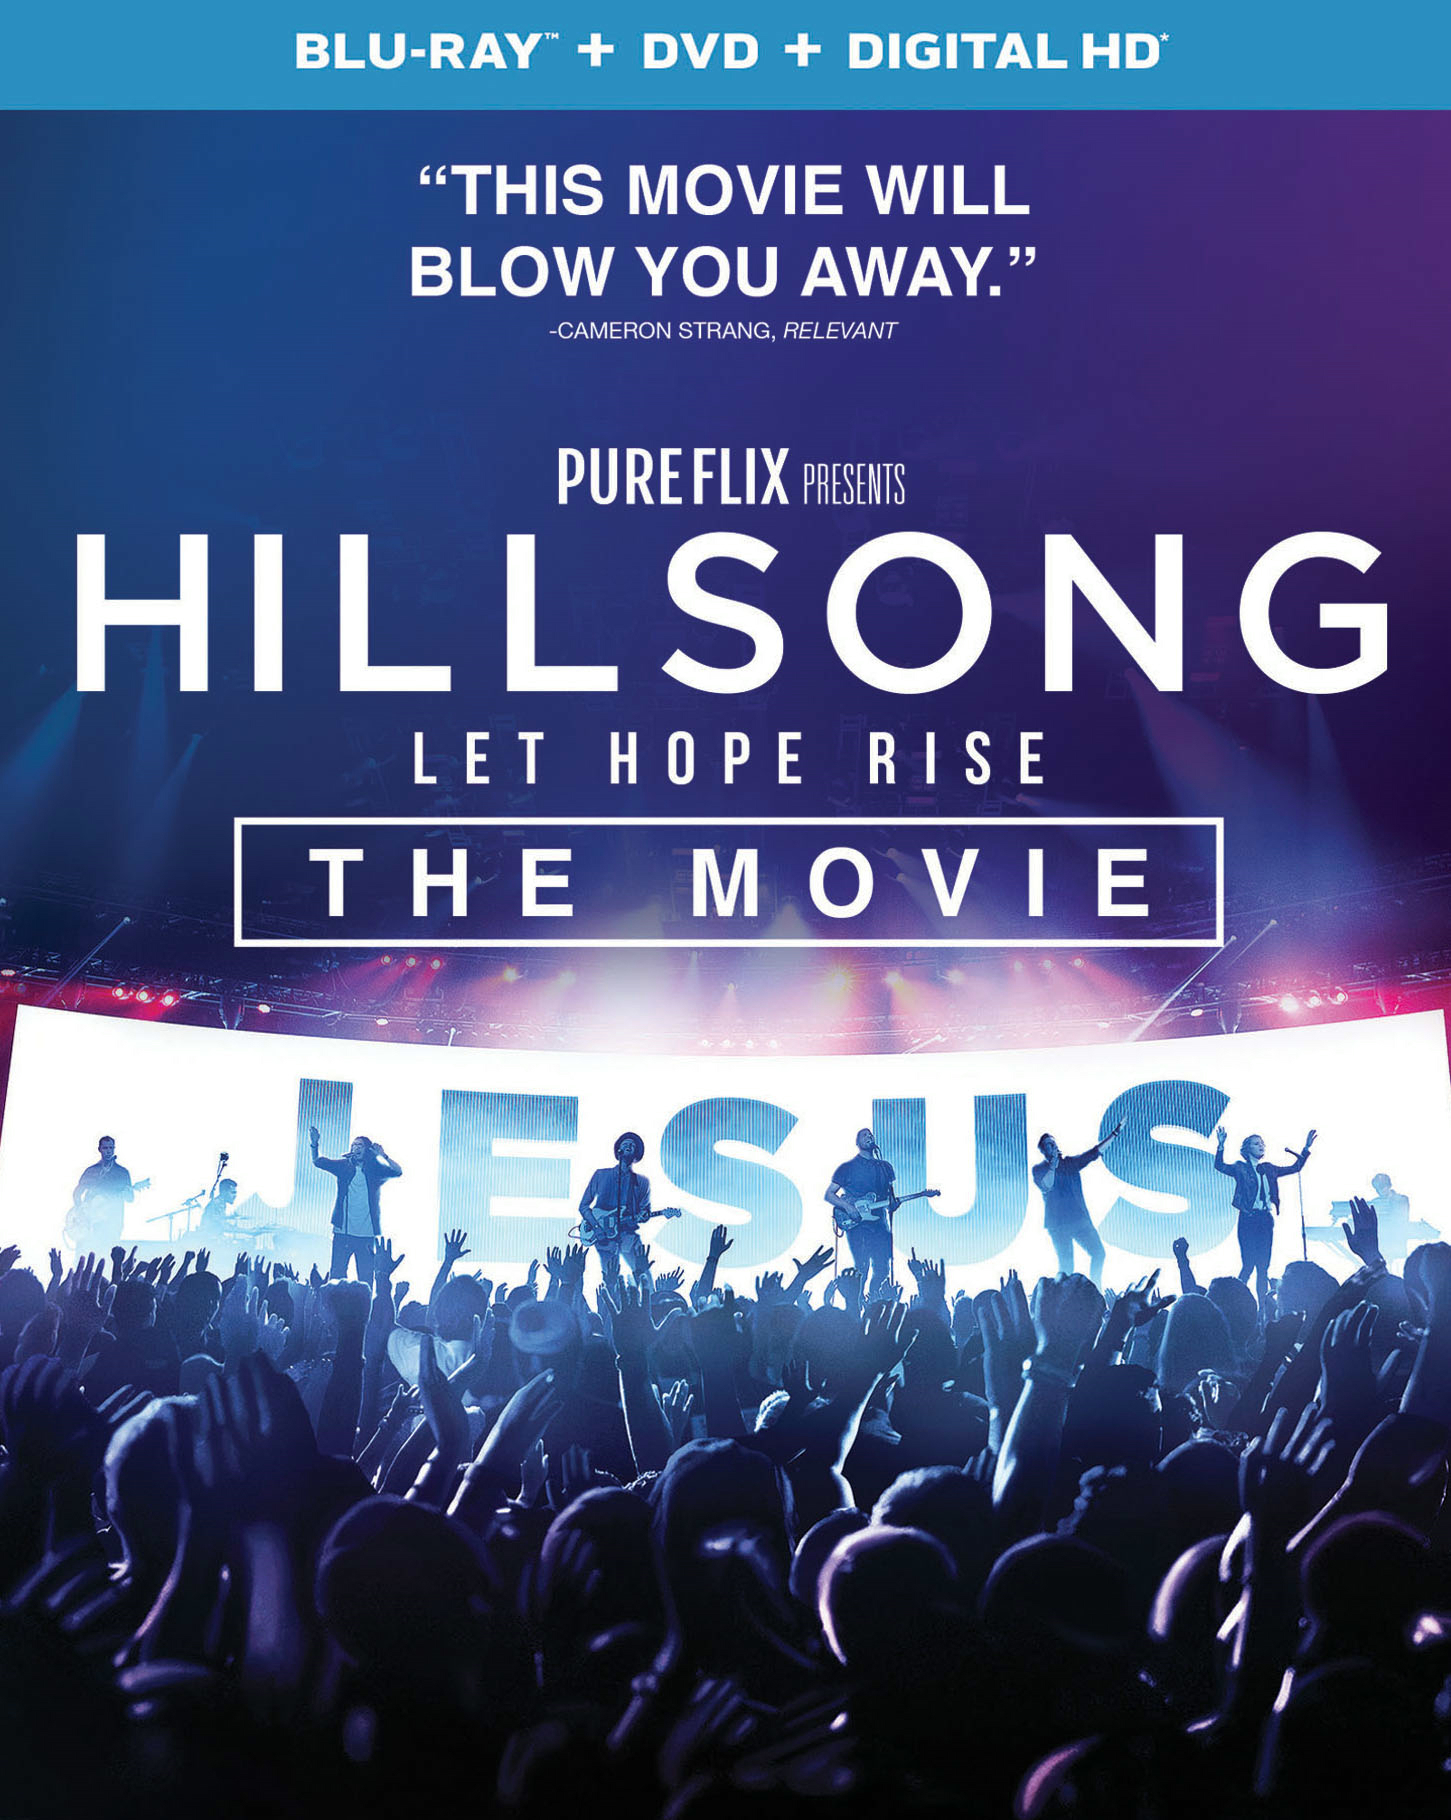 Hillsong: Let Hope Rise (DVD + Digital) - Blu-ray [ 2016 ]  - Documentaries On Blu-ray